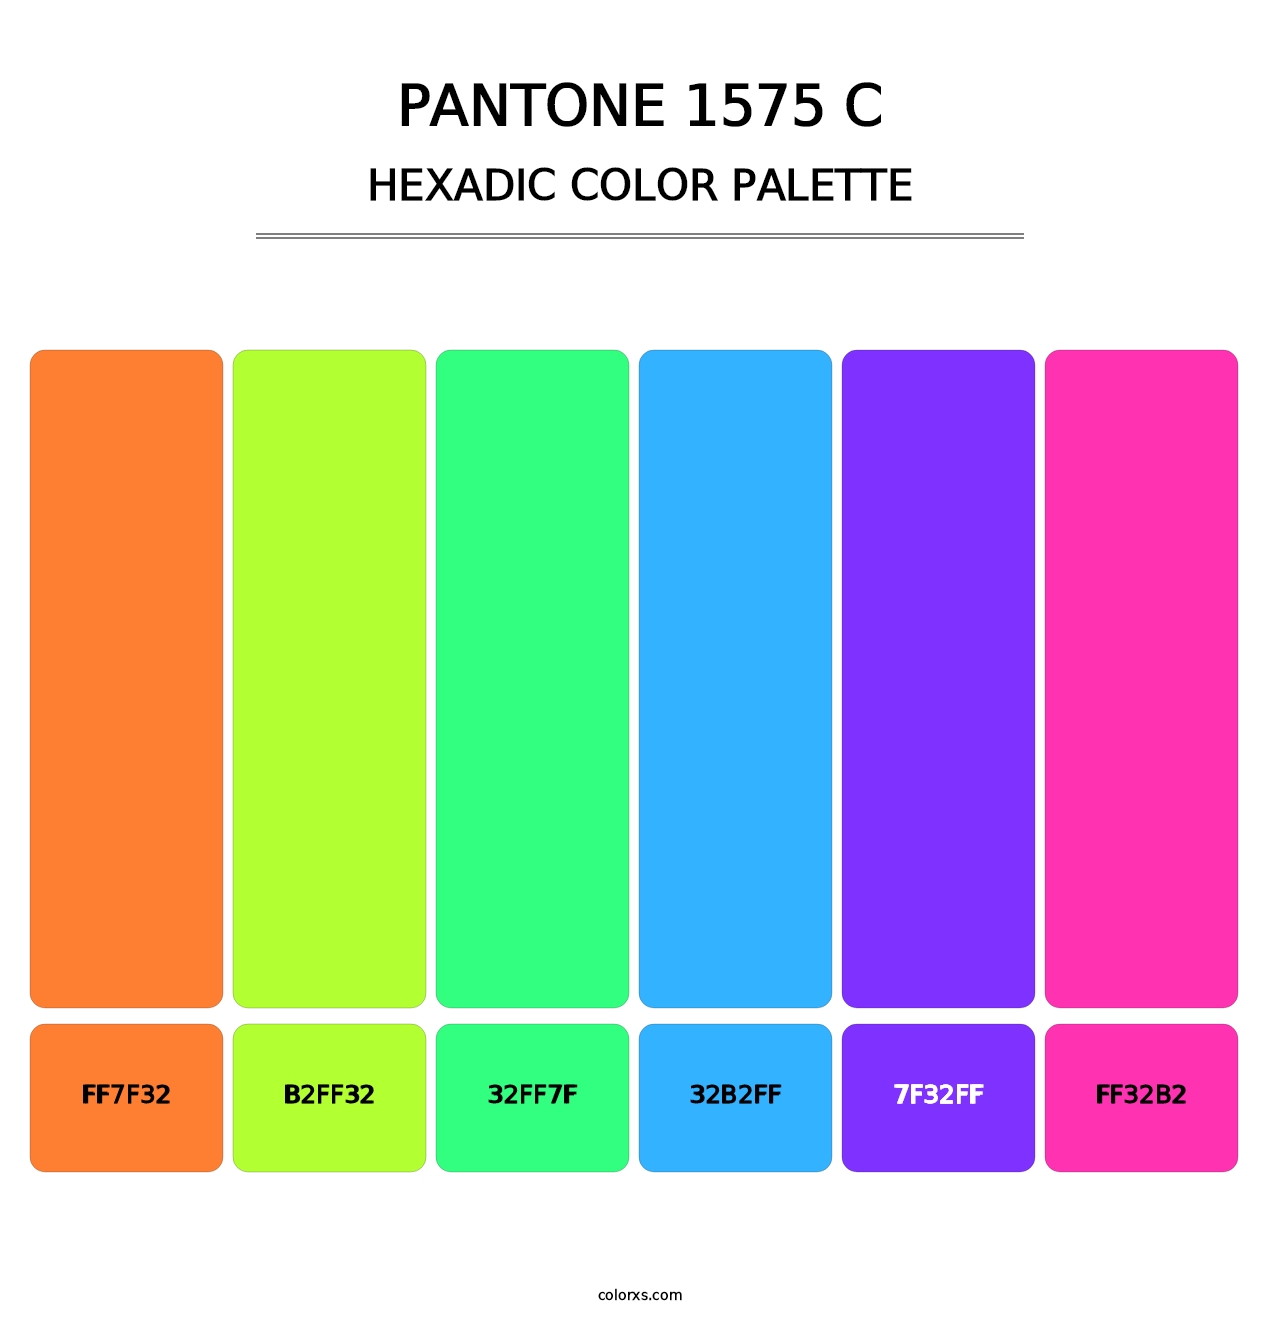 PANTONE 1575 C - Hexadic Color Palette